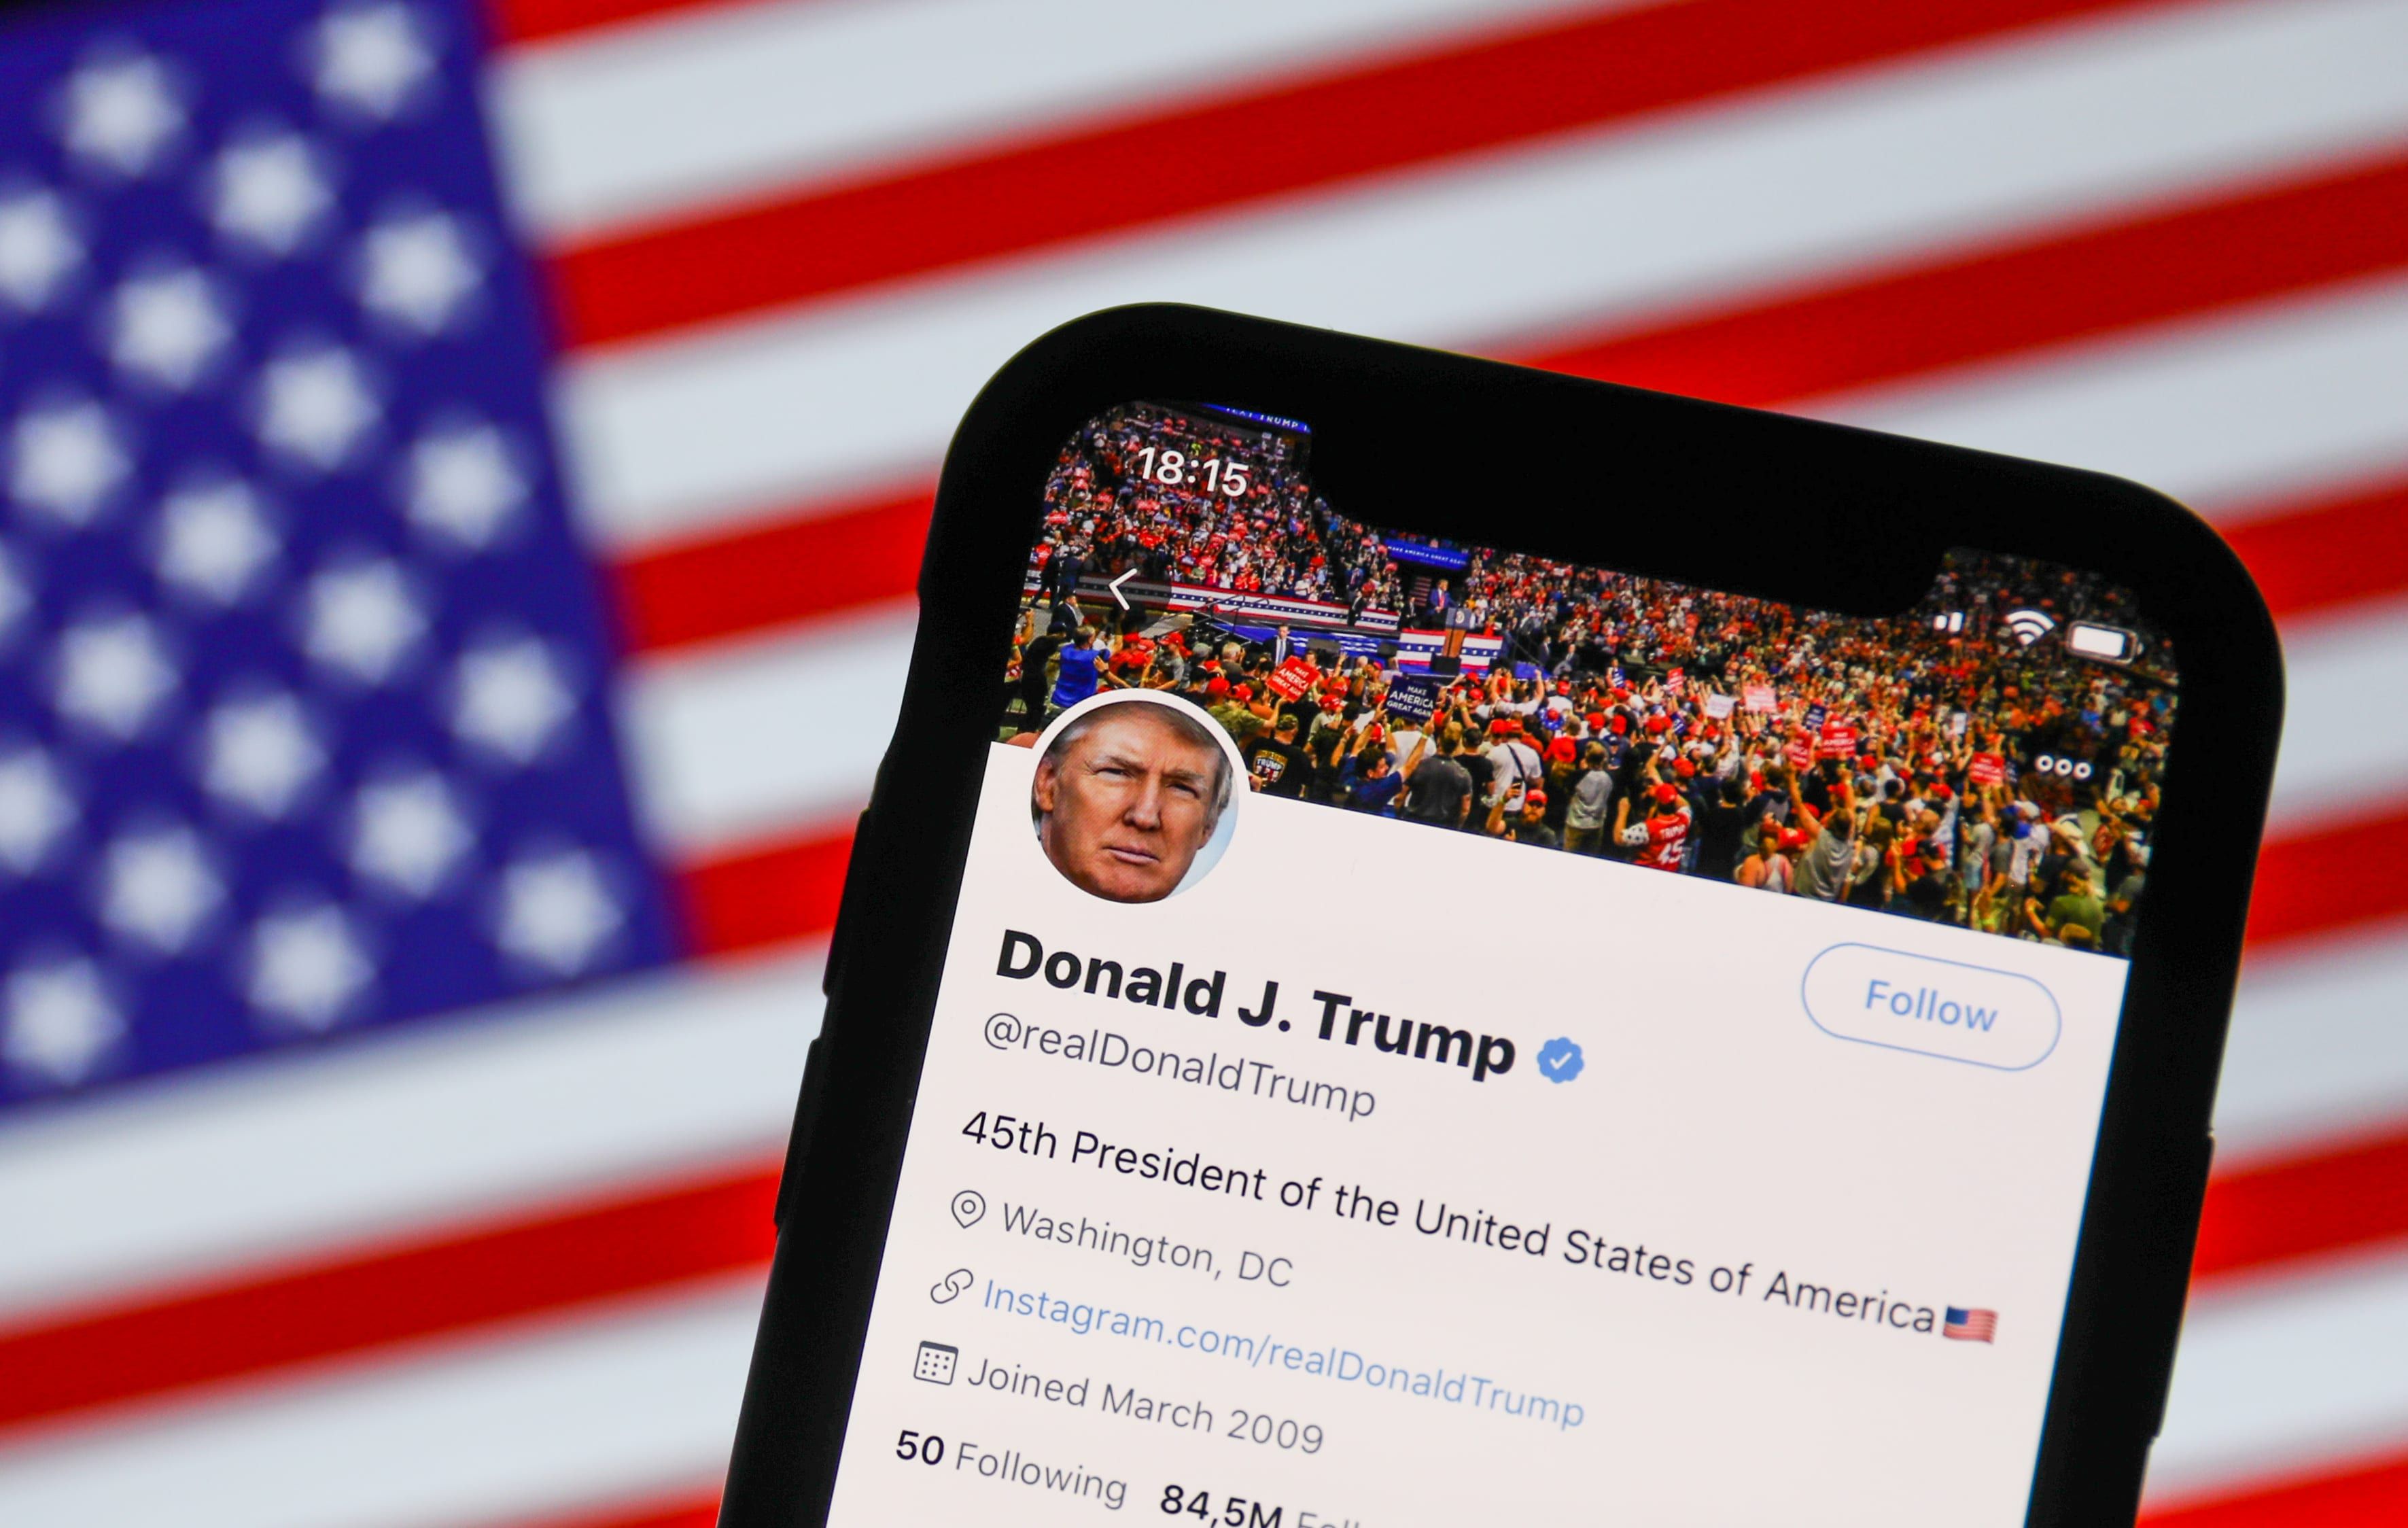 Amb Wars on China, TikTok i Twitter, Trump intenta censurar Internet